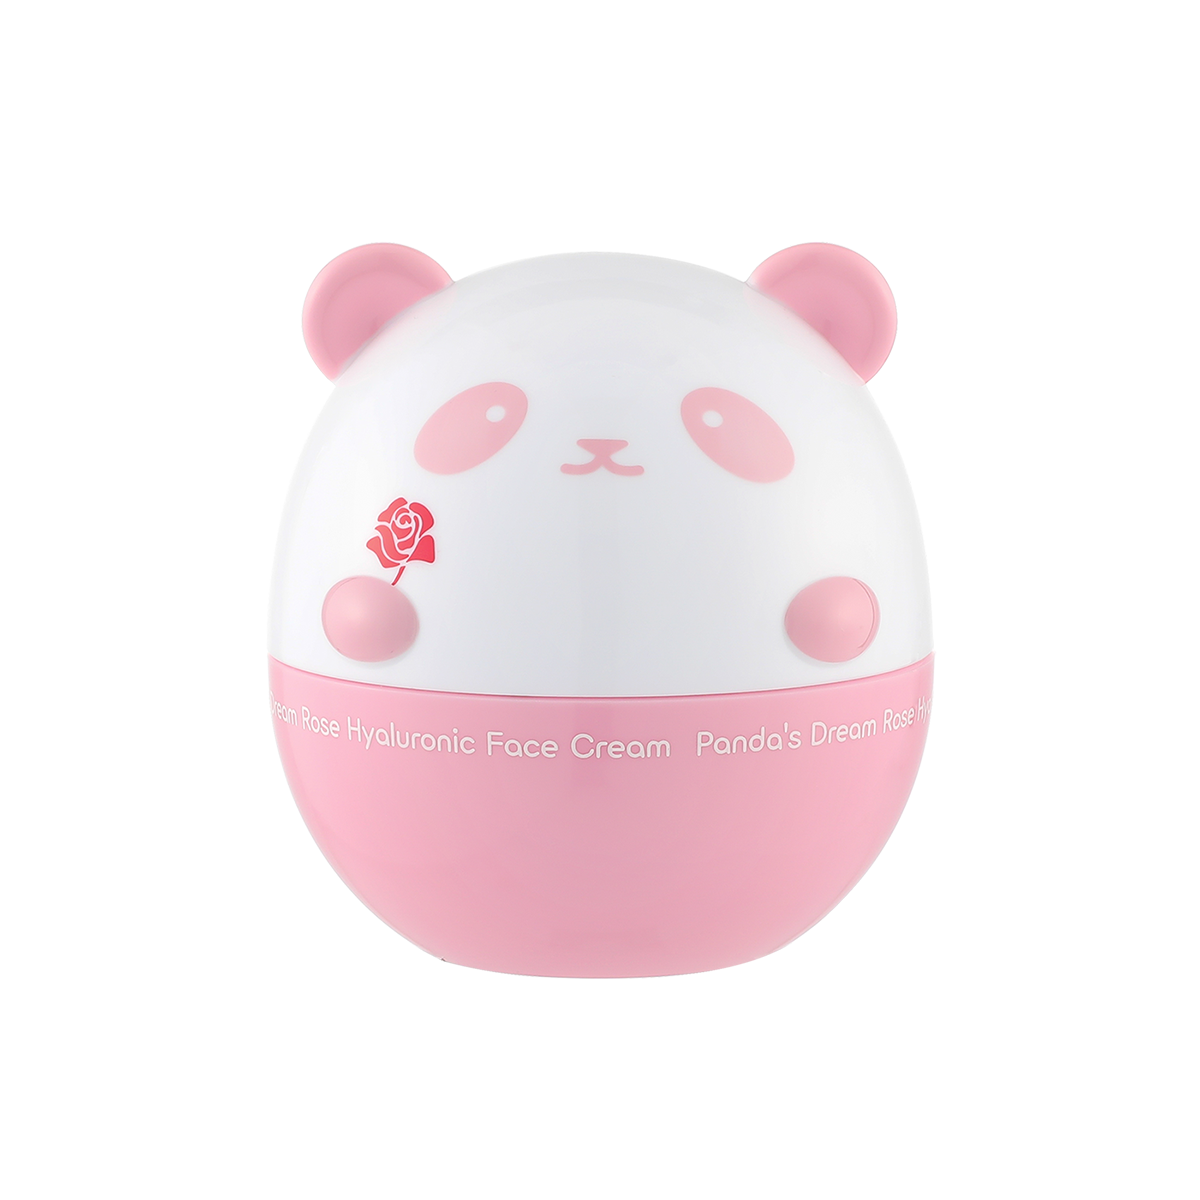 Voorbijganger Conceit logo Panda's Dream Rose Hyaluronic Face Cream